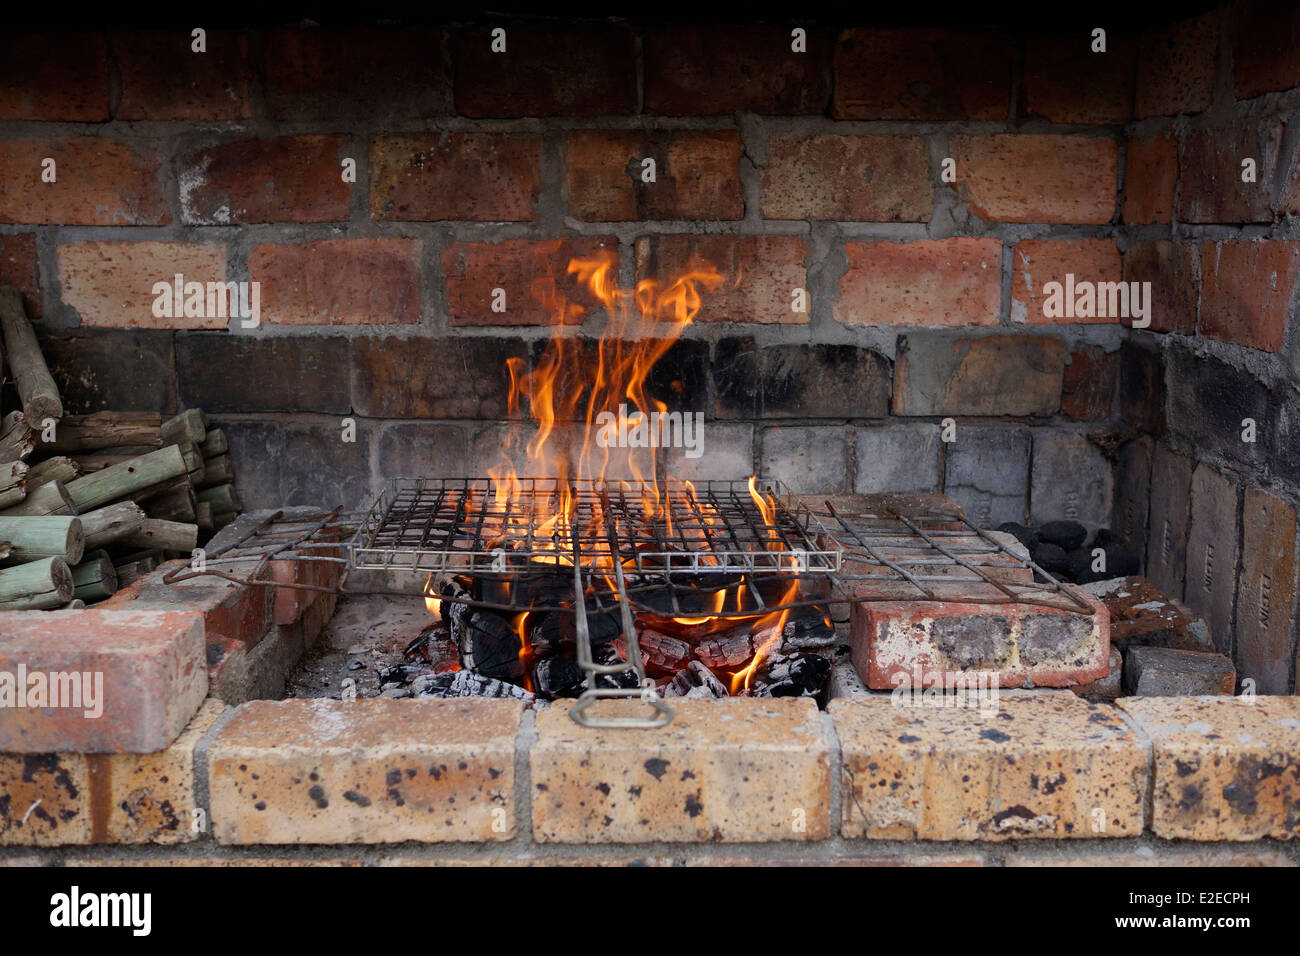 Feuer im Kamin, am Ort genannt "Braai" vom Grill. Stockfoto